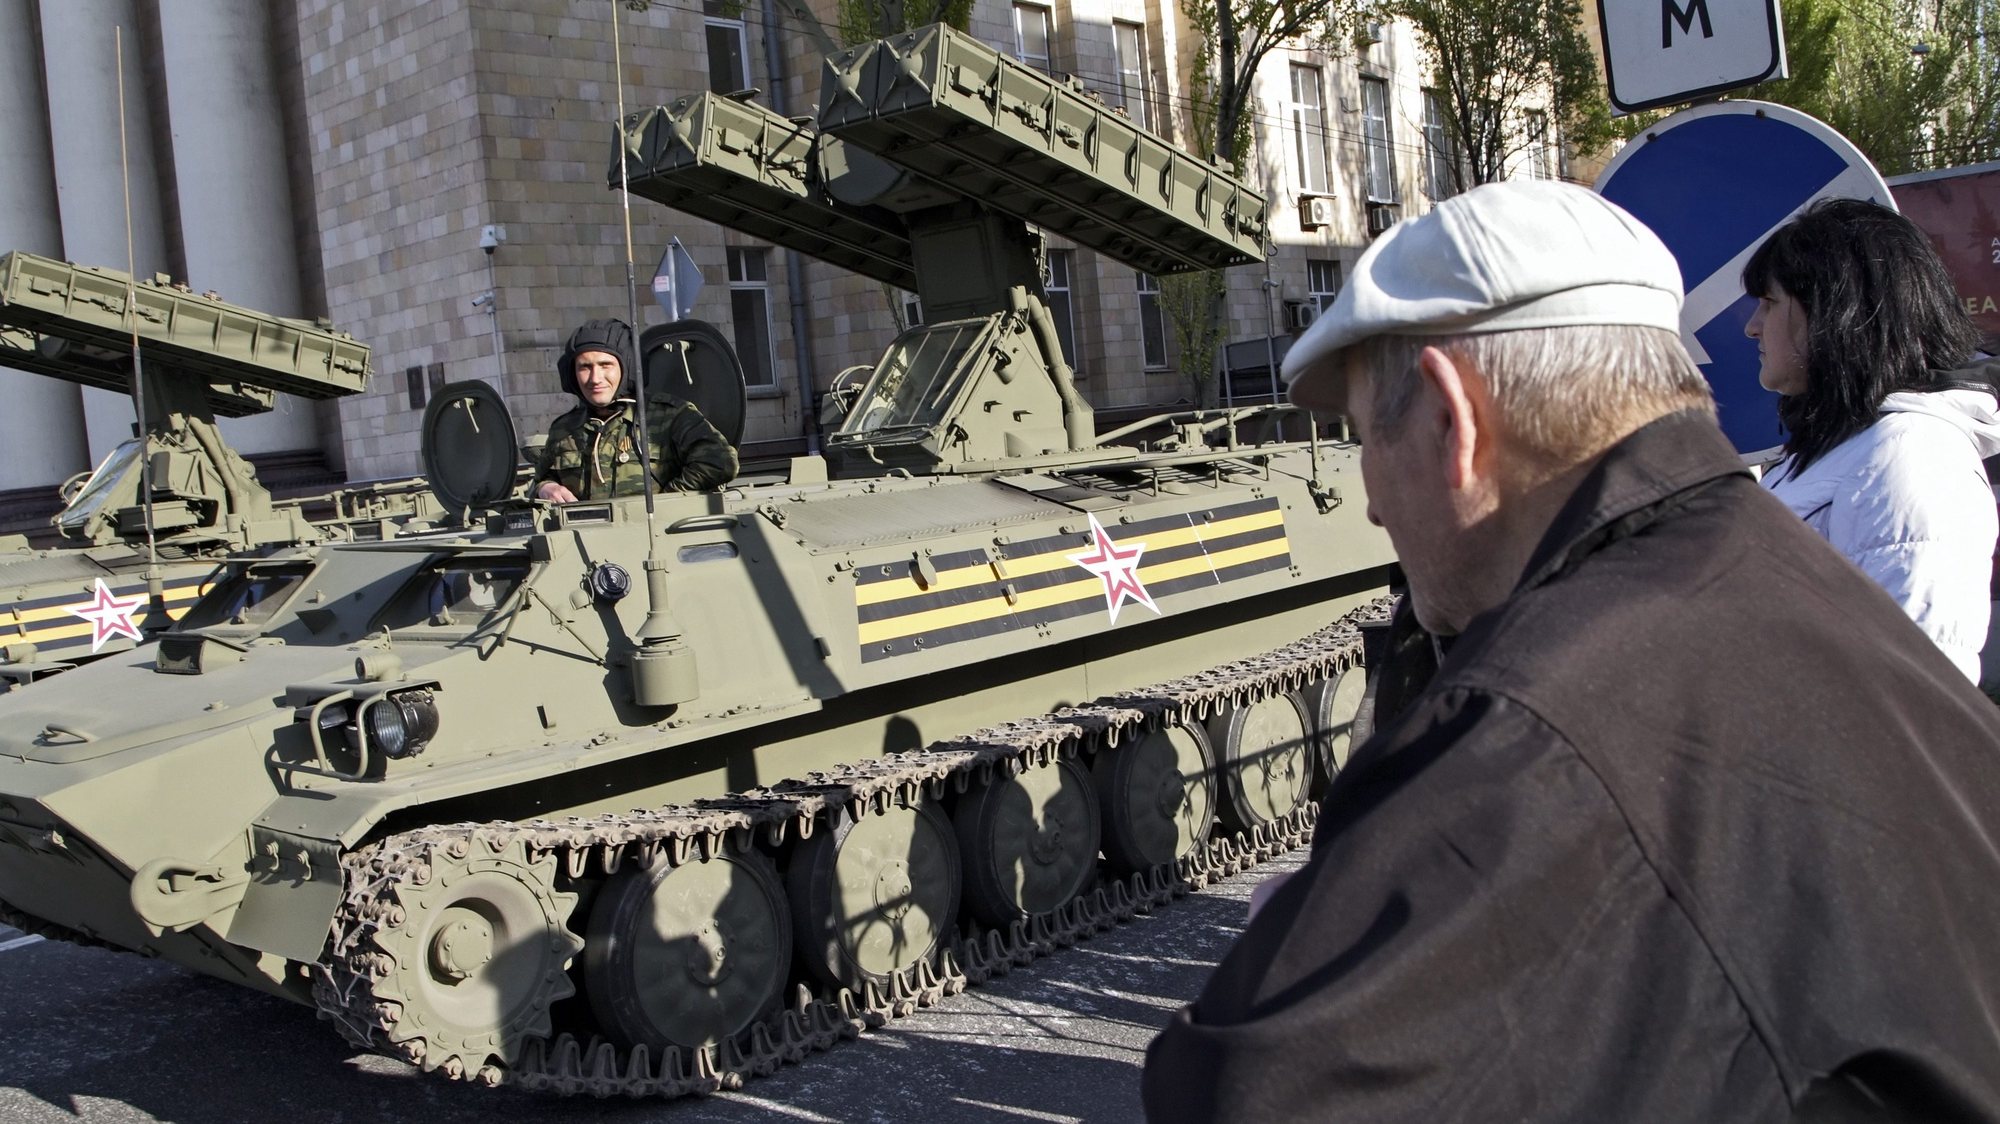 Parada militar em Donetsk